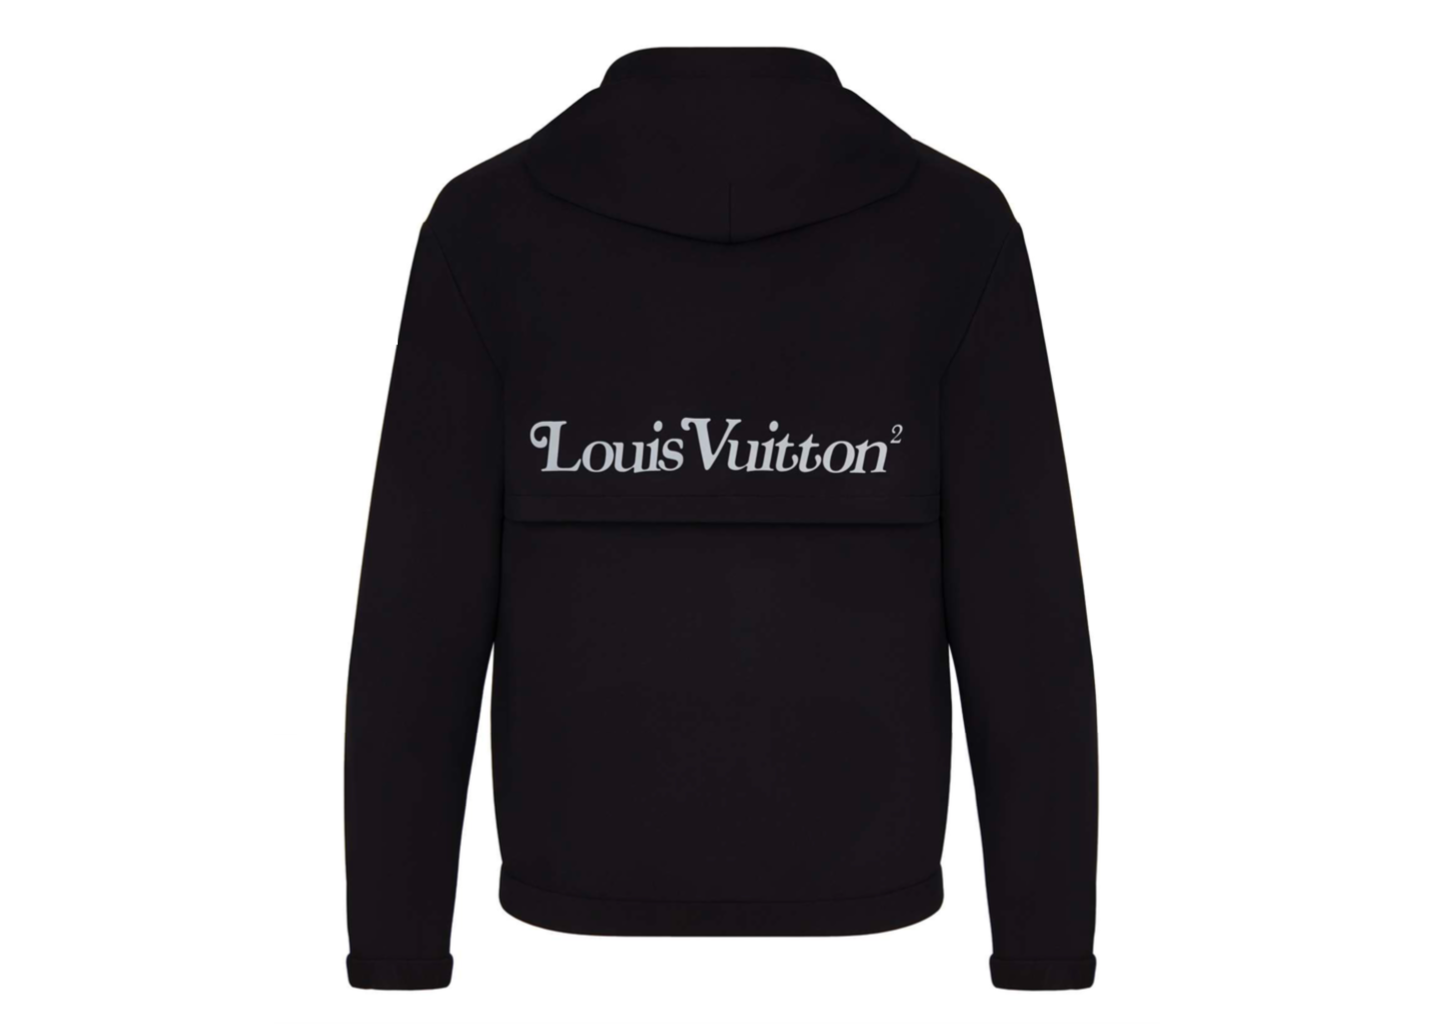 Louis Vuitton x Nigo Reflective Graphic Print Windbreaker - Black